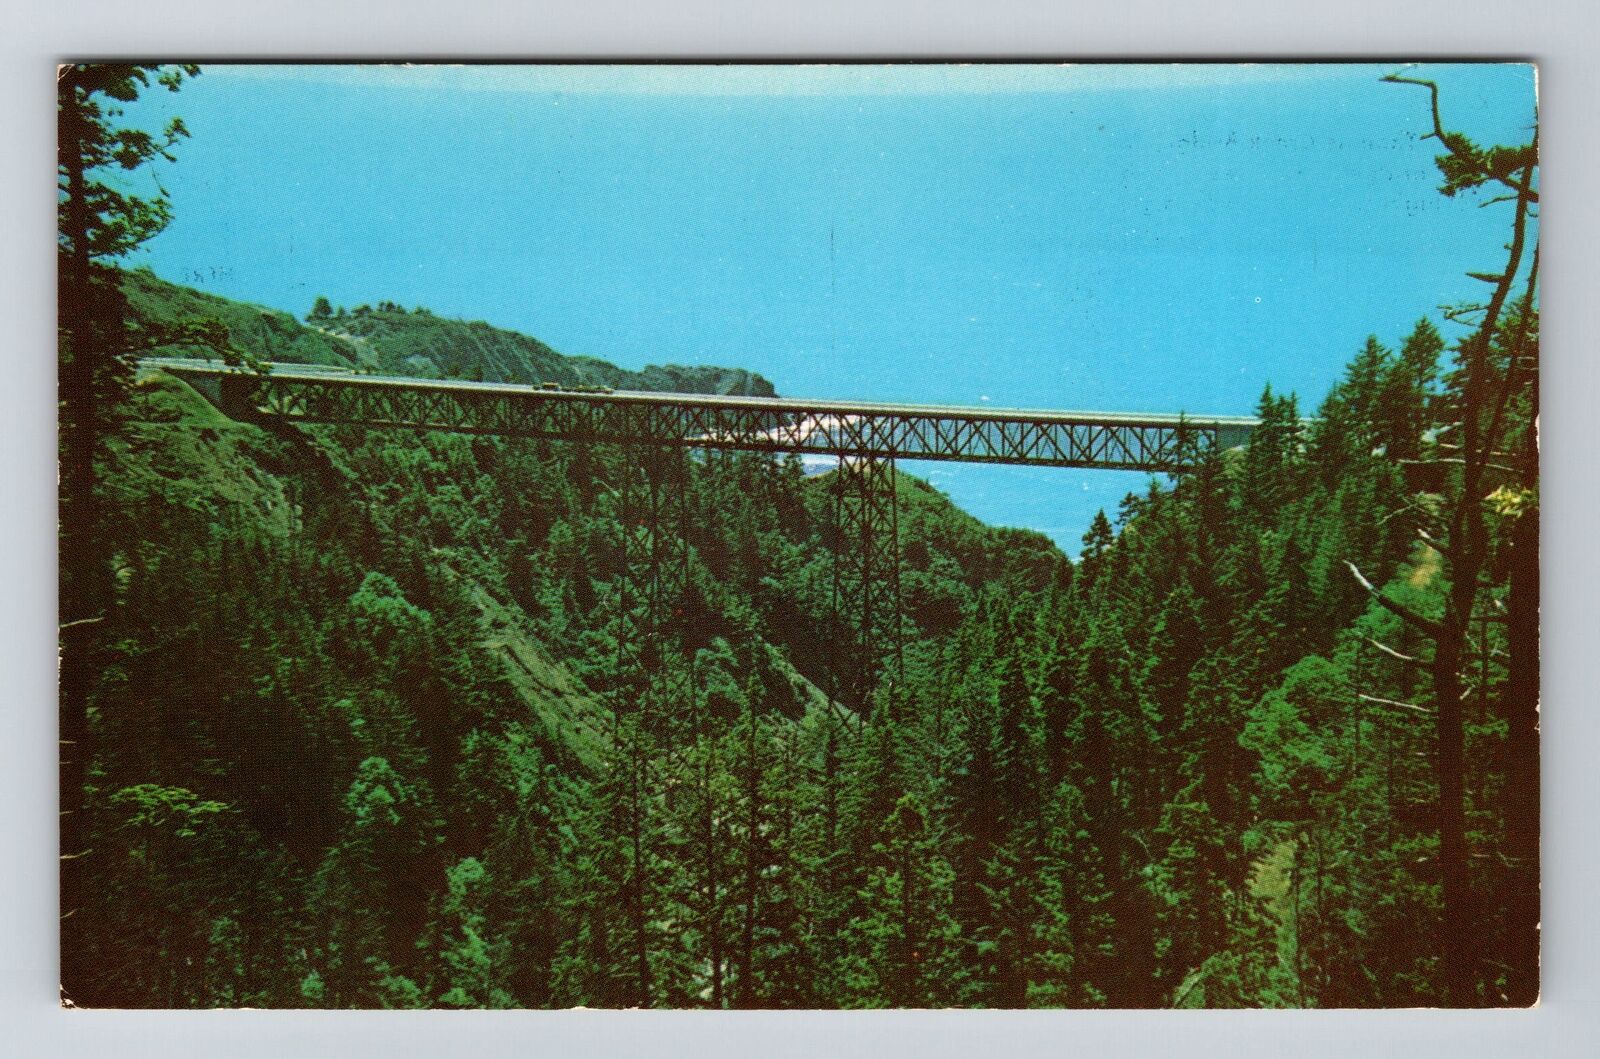 OR-Oregon, Thomas Creek Bridge, Oregon Coast, Vintage Postcard